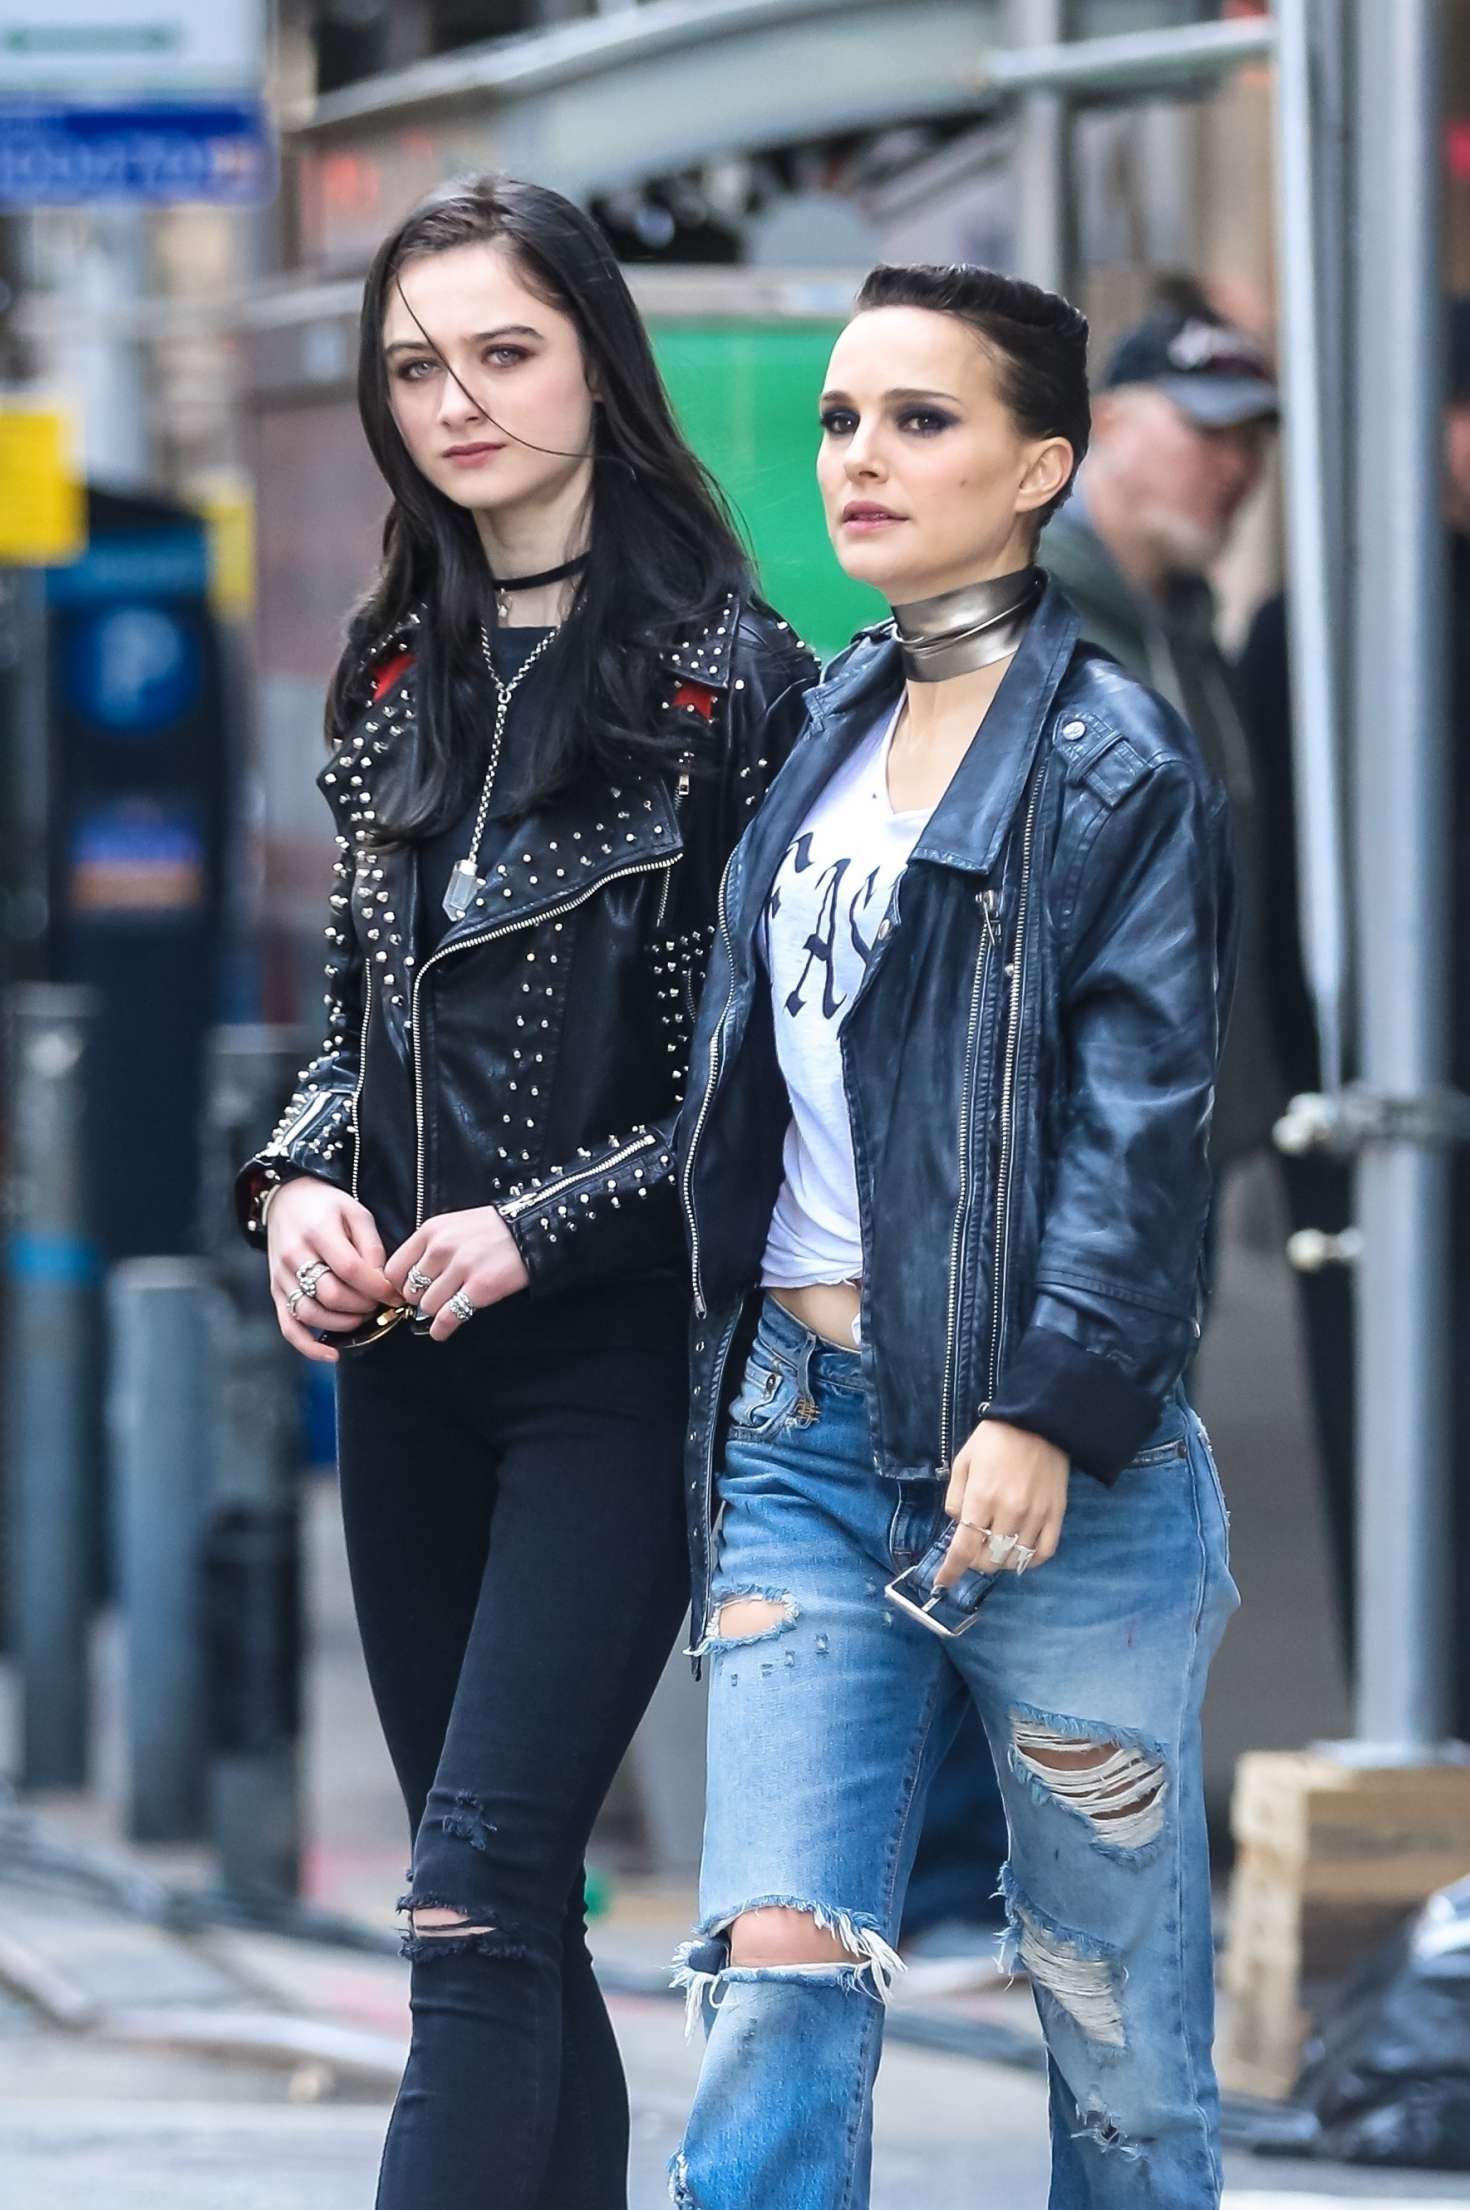 Natalie Portman and Raffey Cassidy - Filming new movie 'Vox Lux' in New York